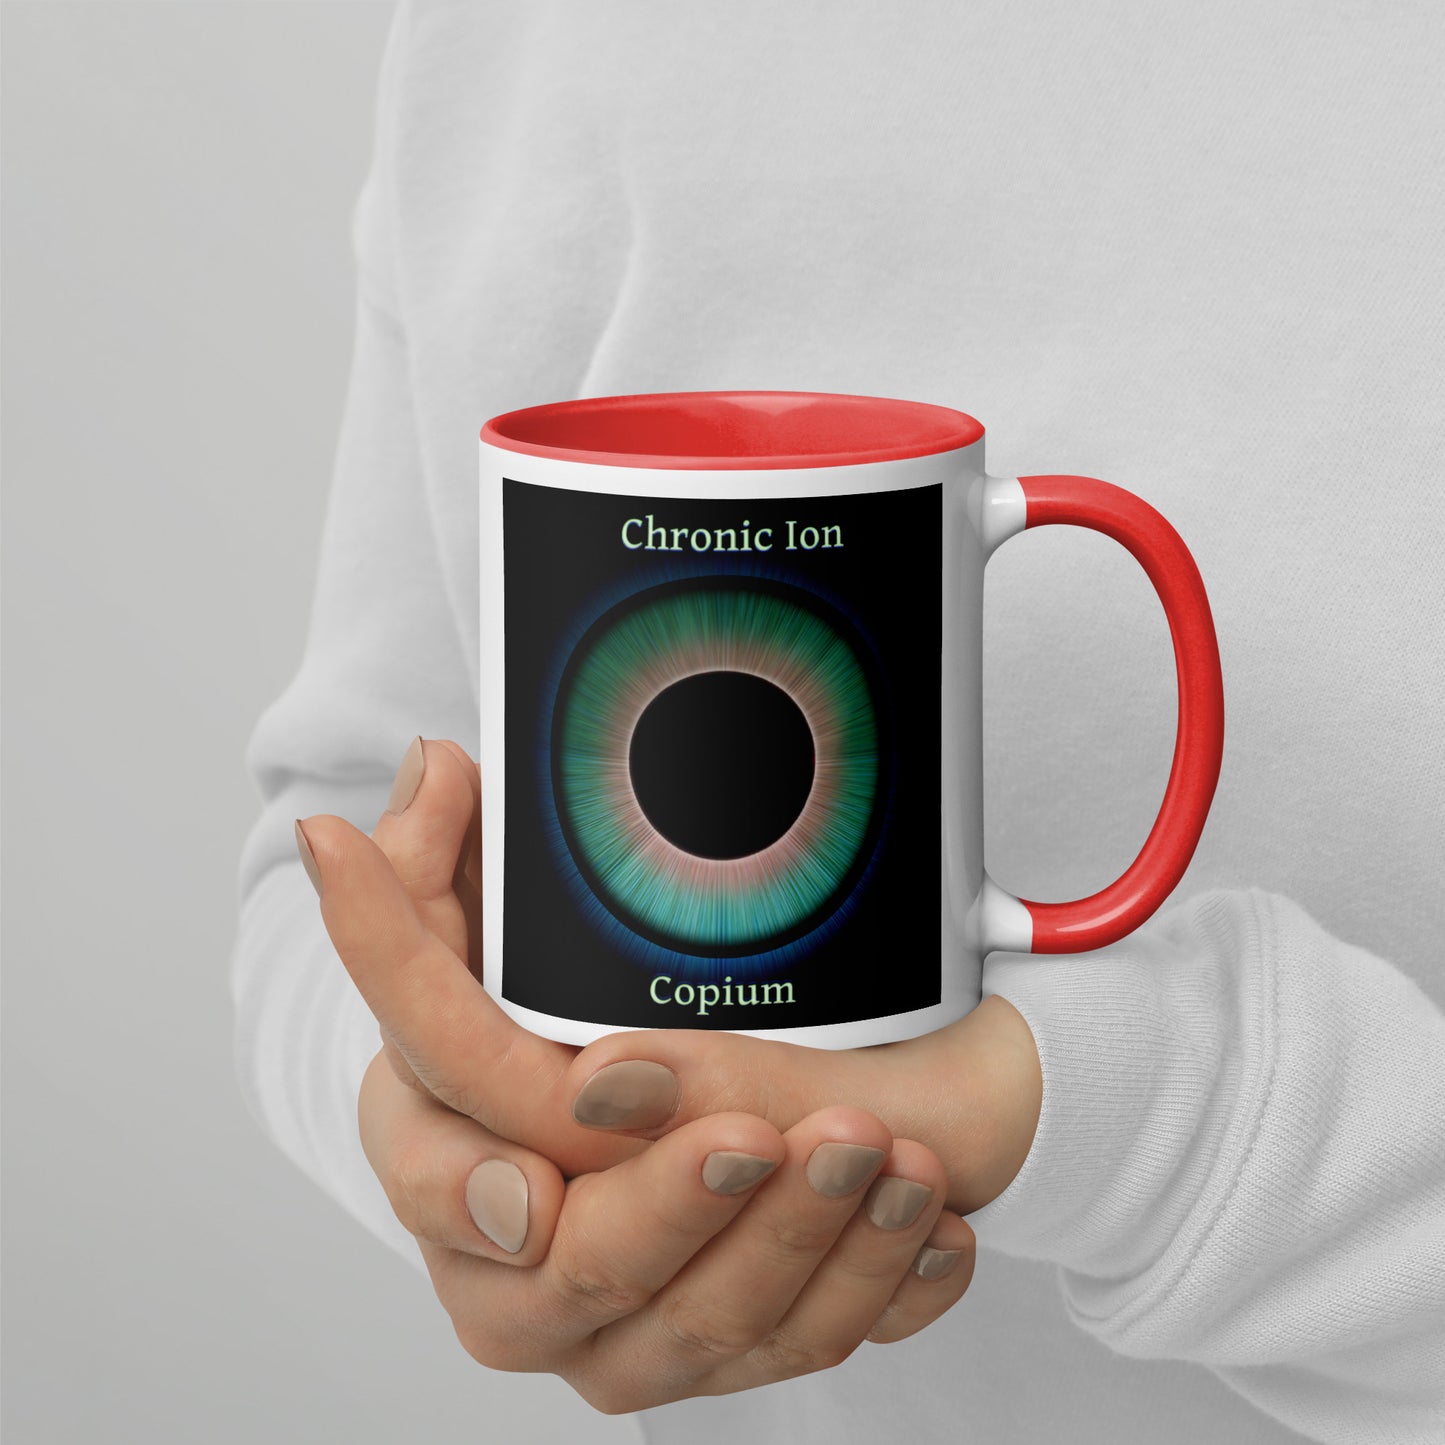 Chronic Ion - Copium Mug With Color Inside